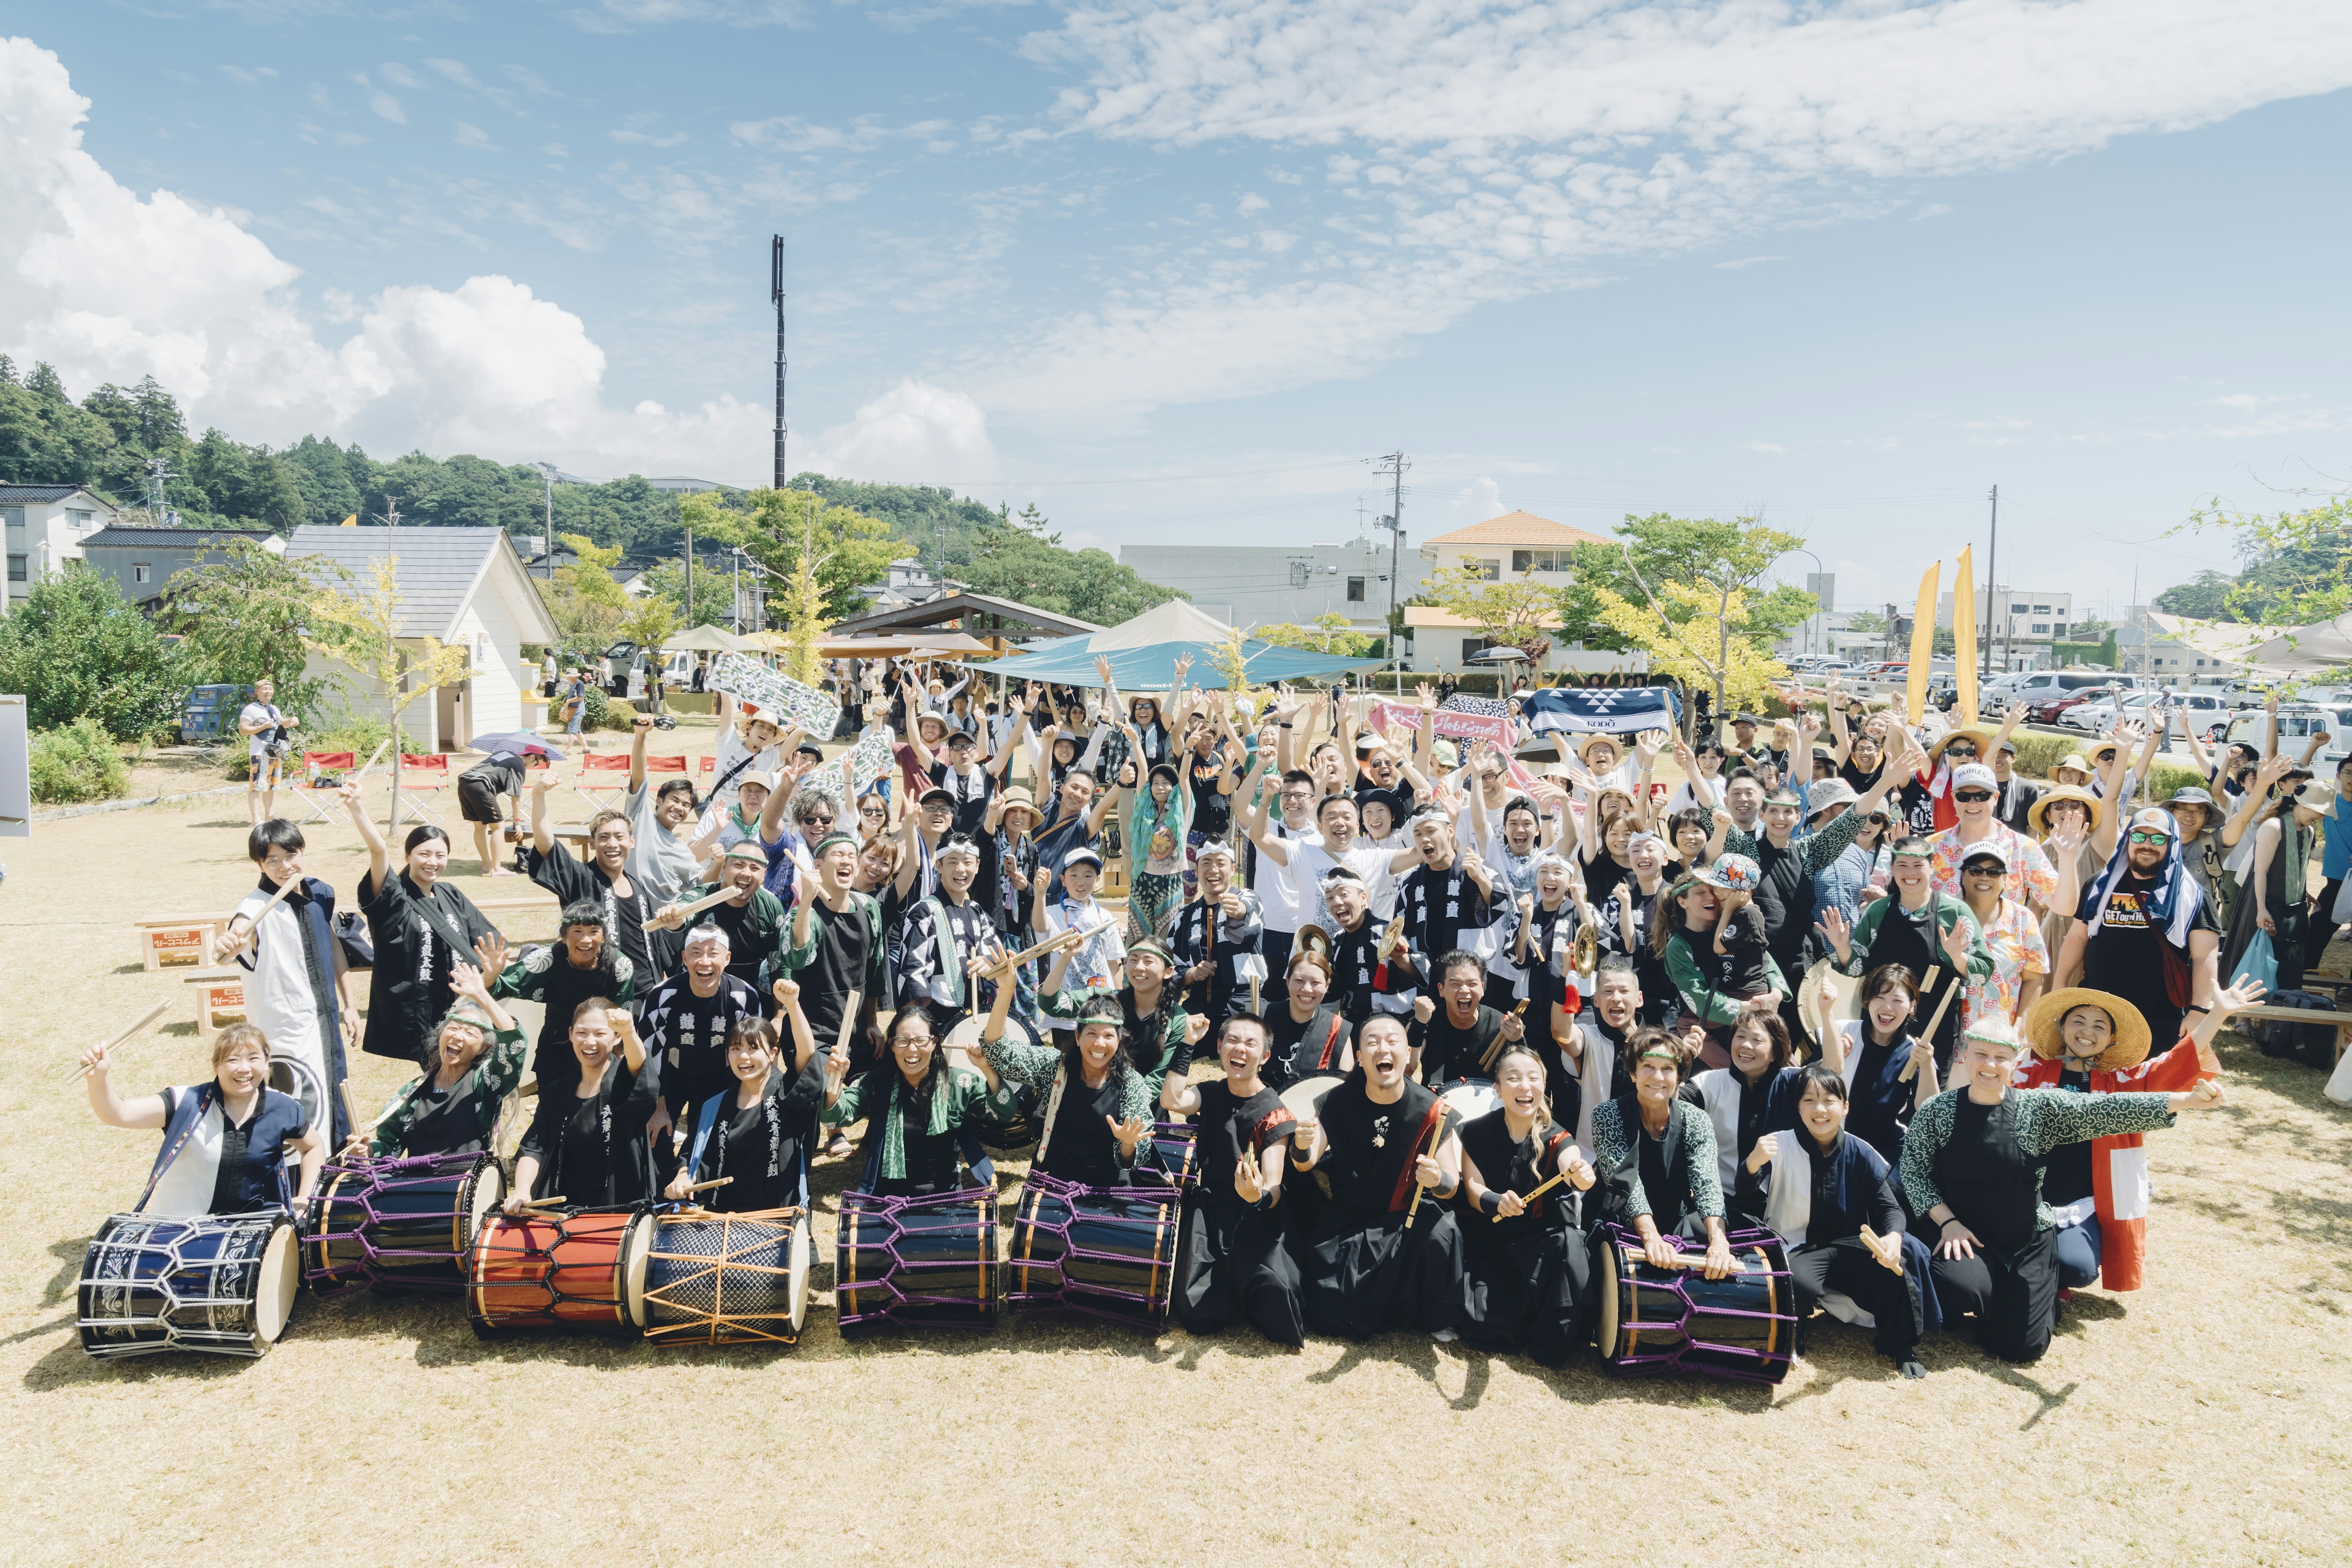 Seeking taiko groups to perform at Big Little Taiko Fest